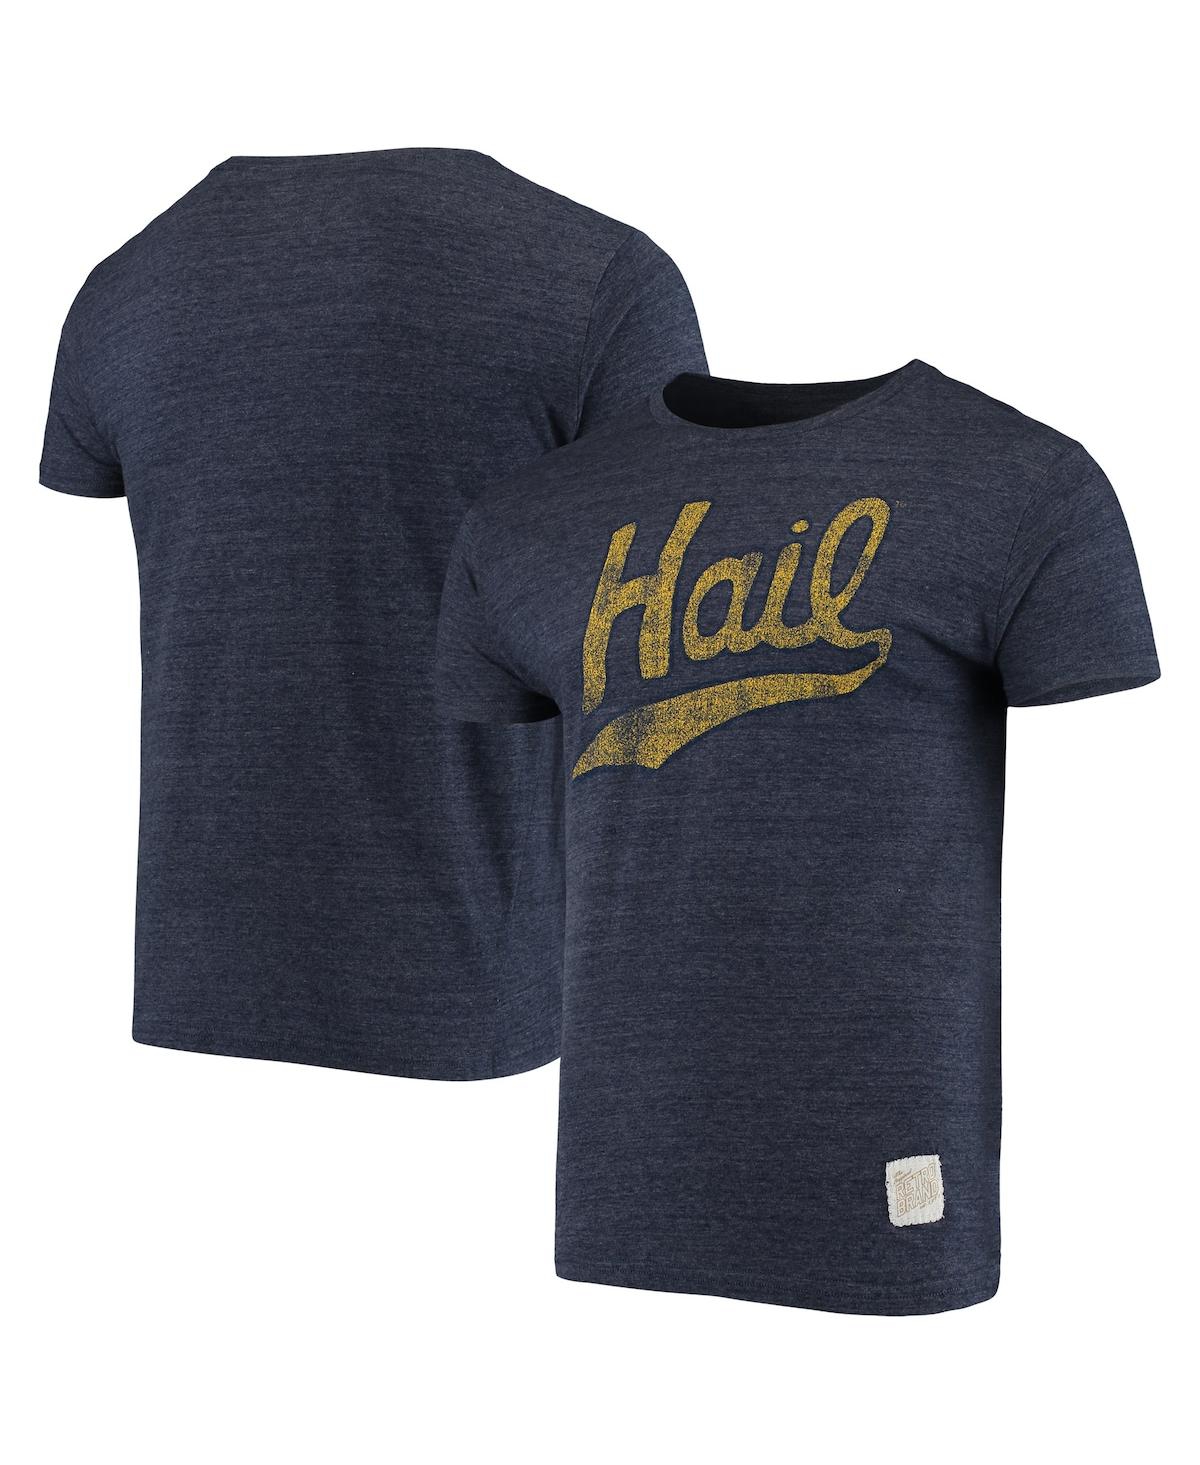 Men's Heathered Navy Michigan Wolverines Vintage-Like Hail Tri-Blend T-shirt - Heathered Navy